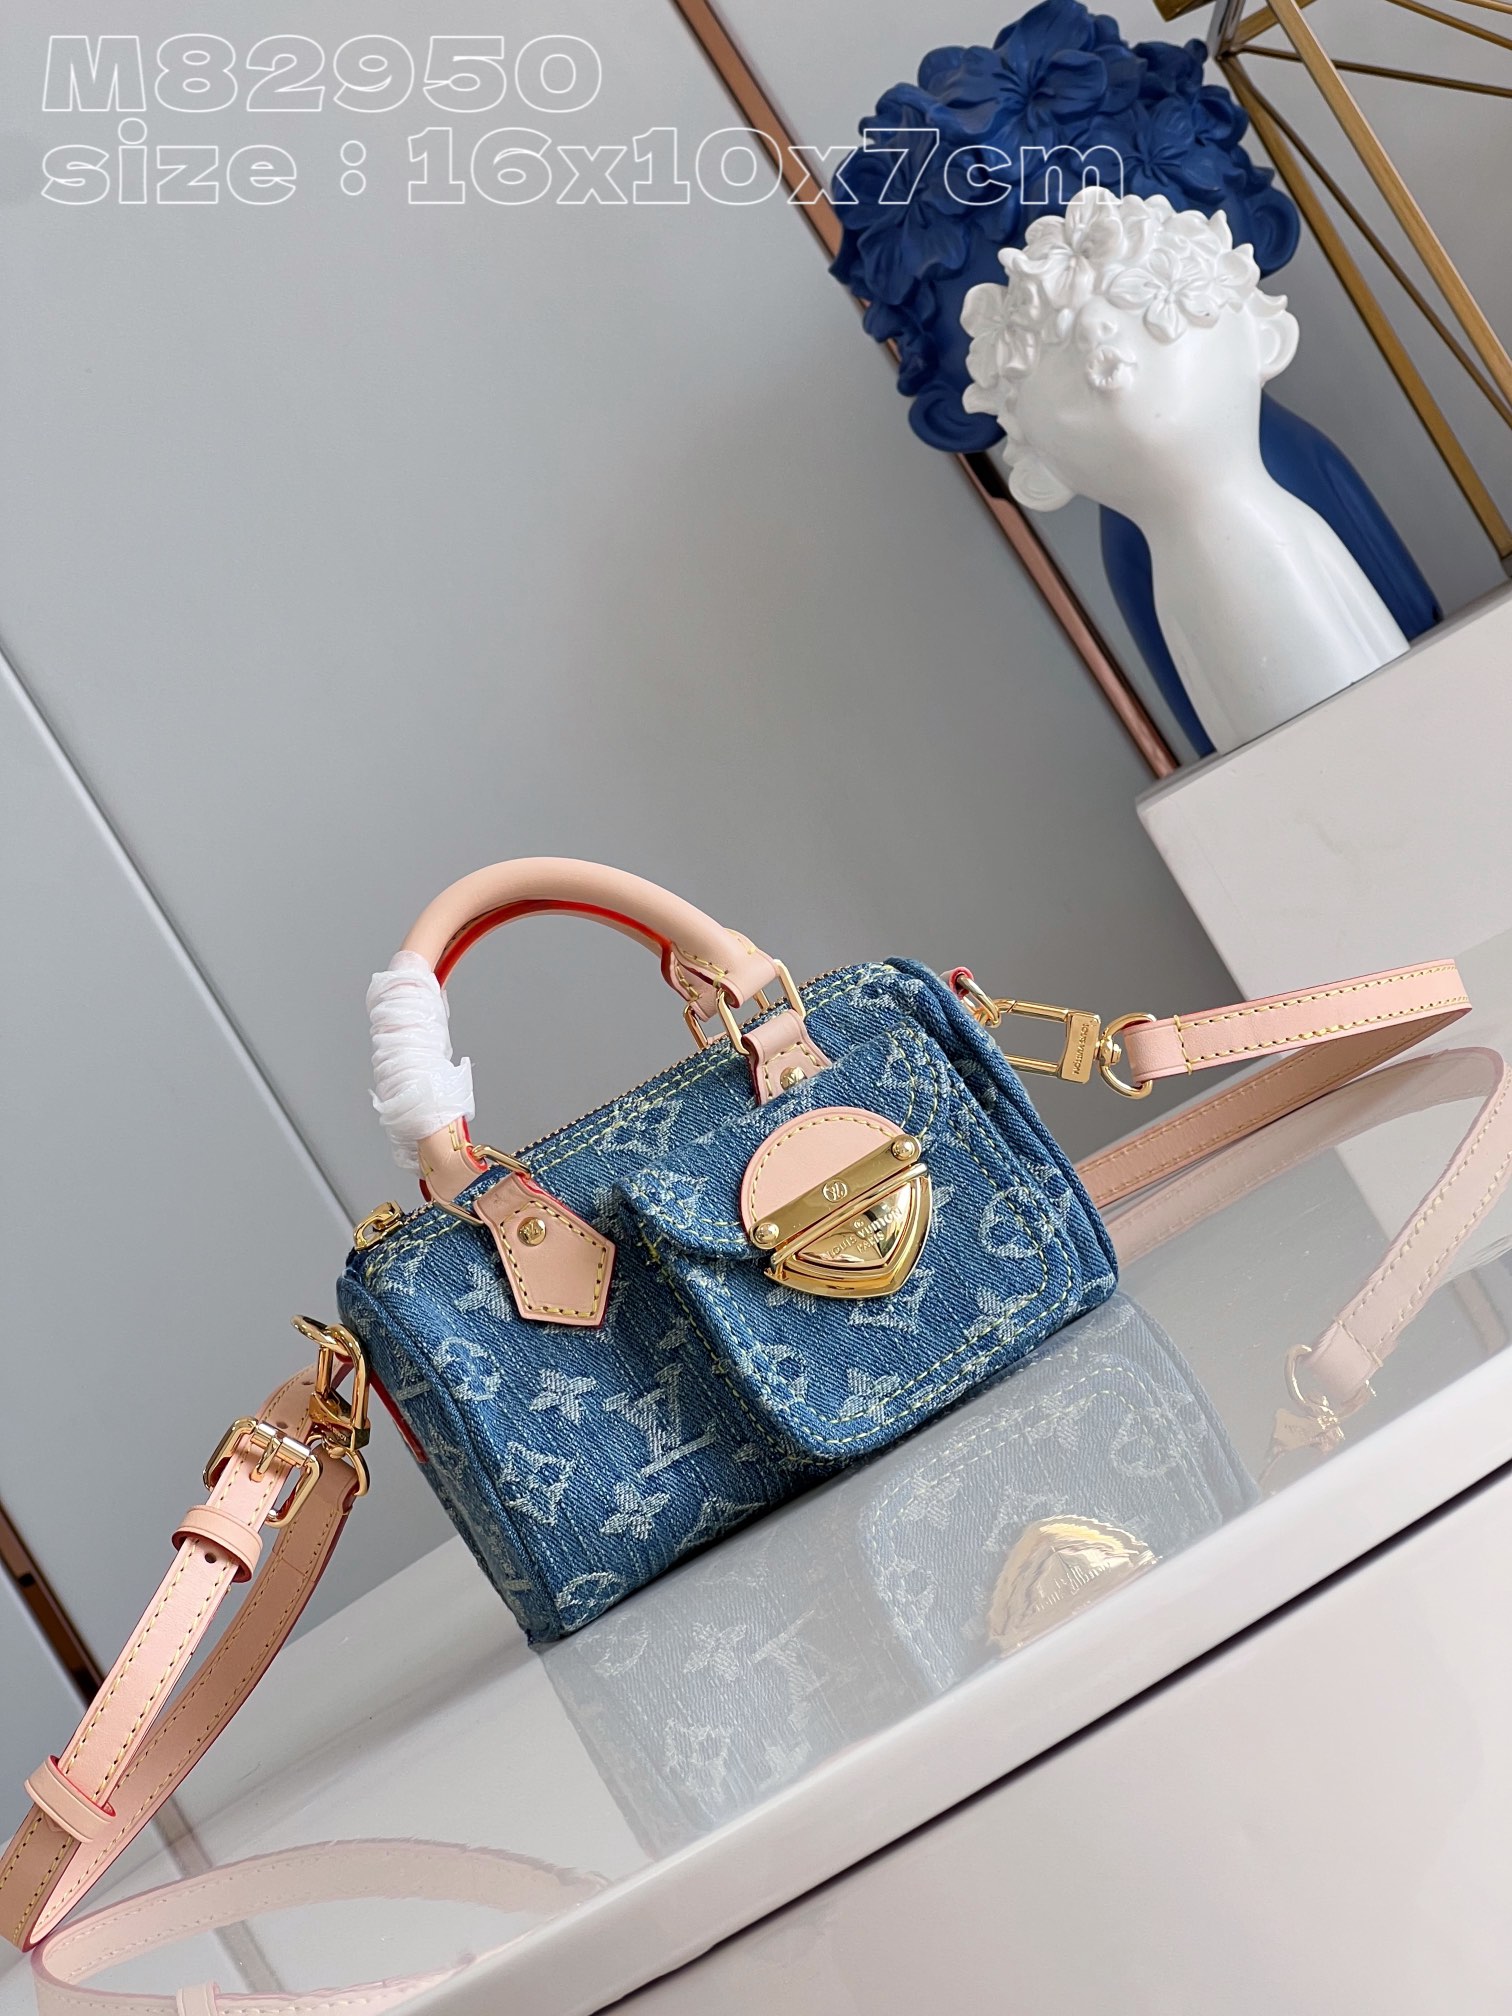 We Offer
 Louis Vuitton LV Speedy Bags Handbags Canvas Cotton Denim M82950